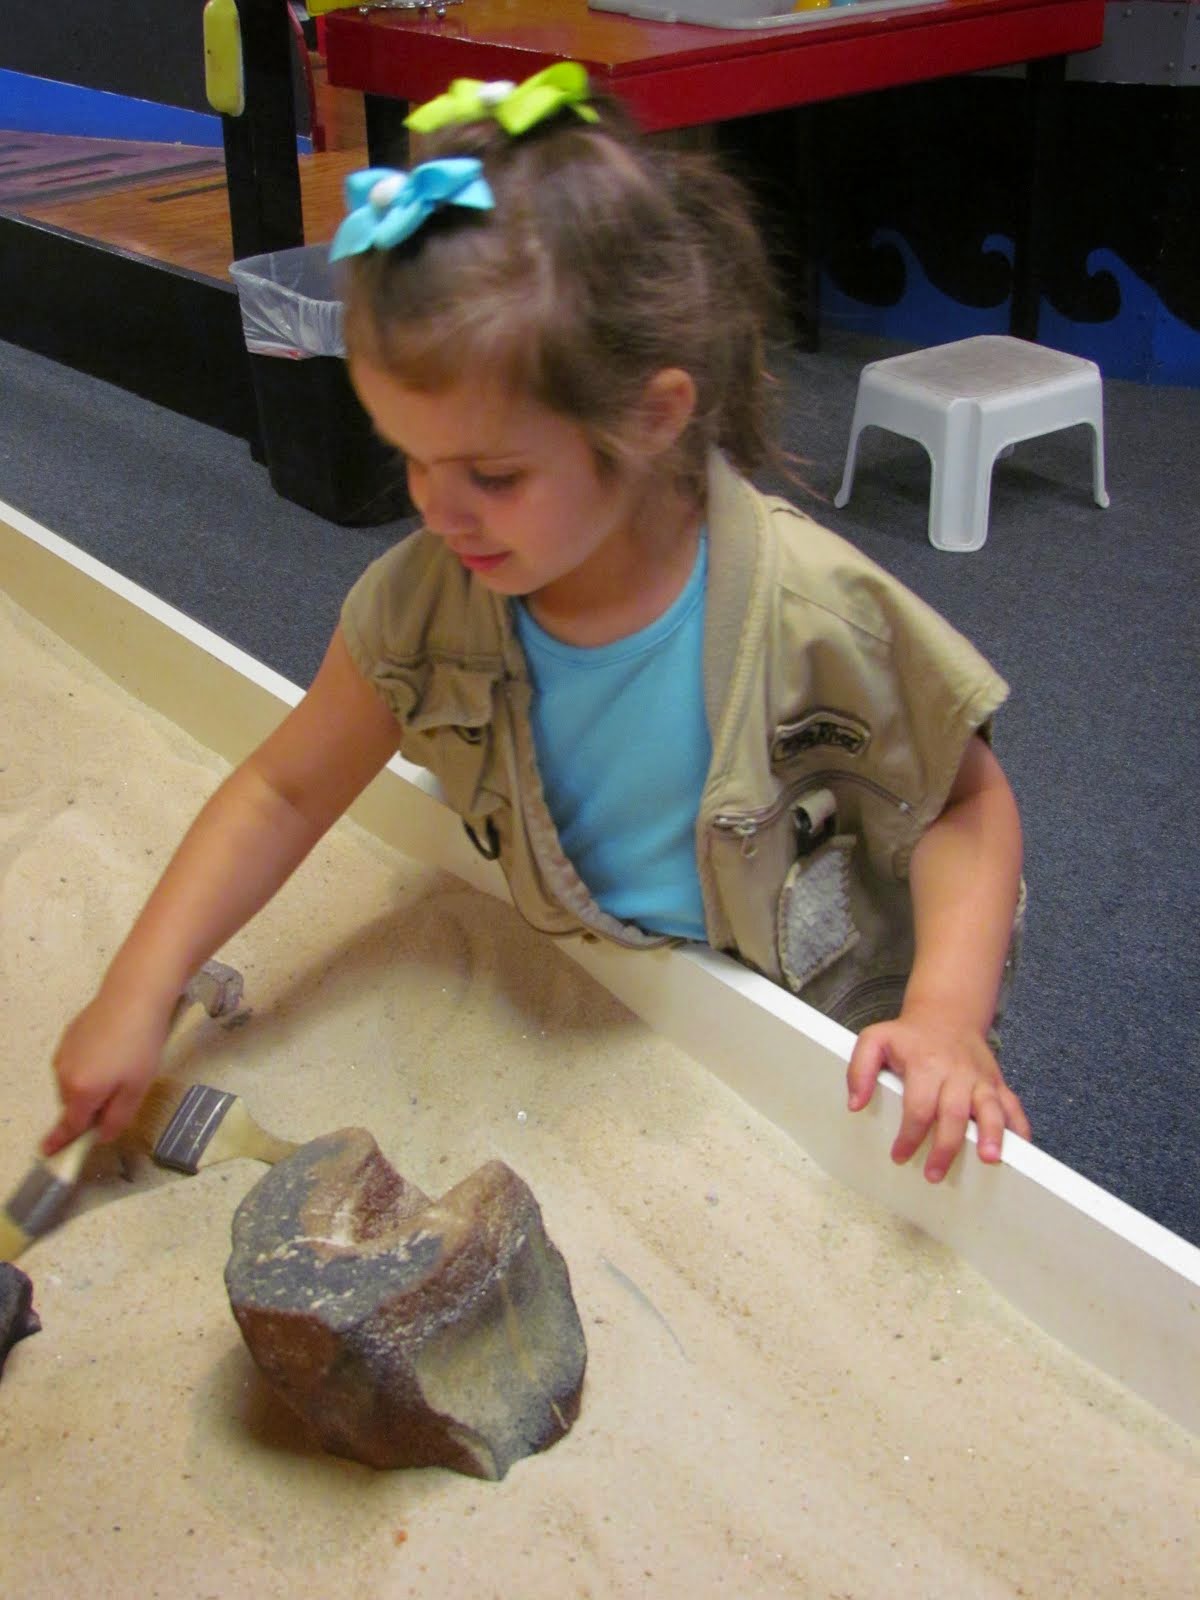 future paleontologist?!?!?!?